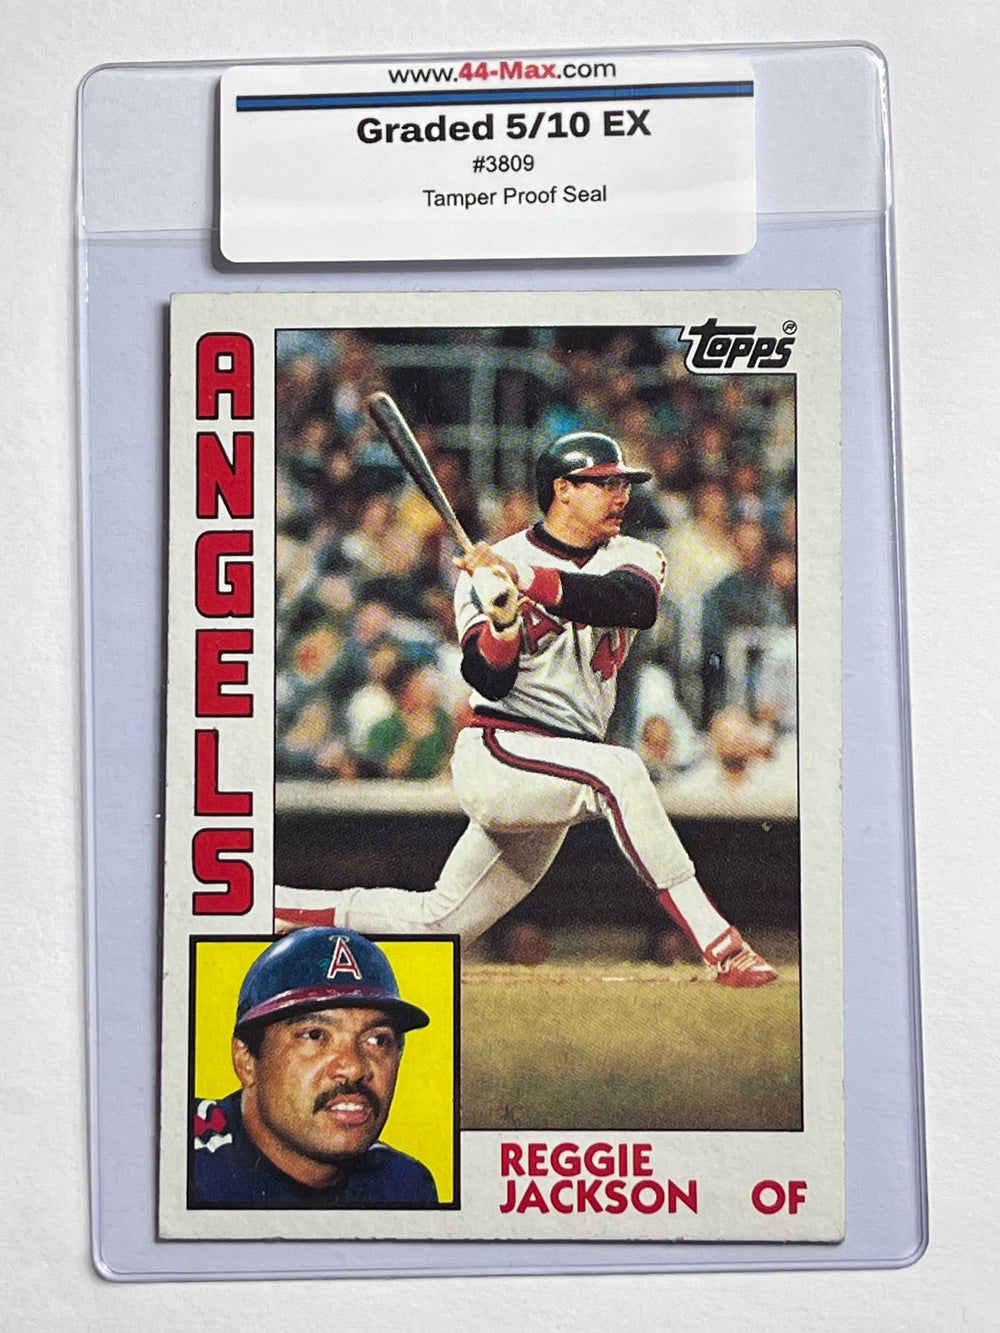 Reggie Jackson 1984 Topps Baseball Card. 44-Max 5/10 EX #3809